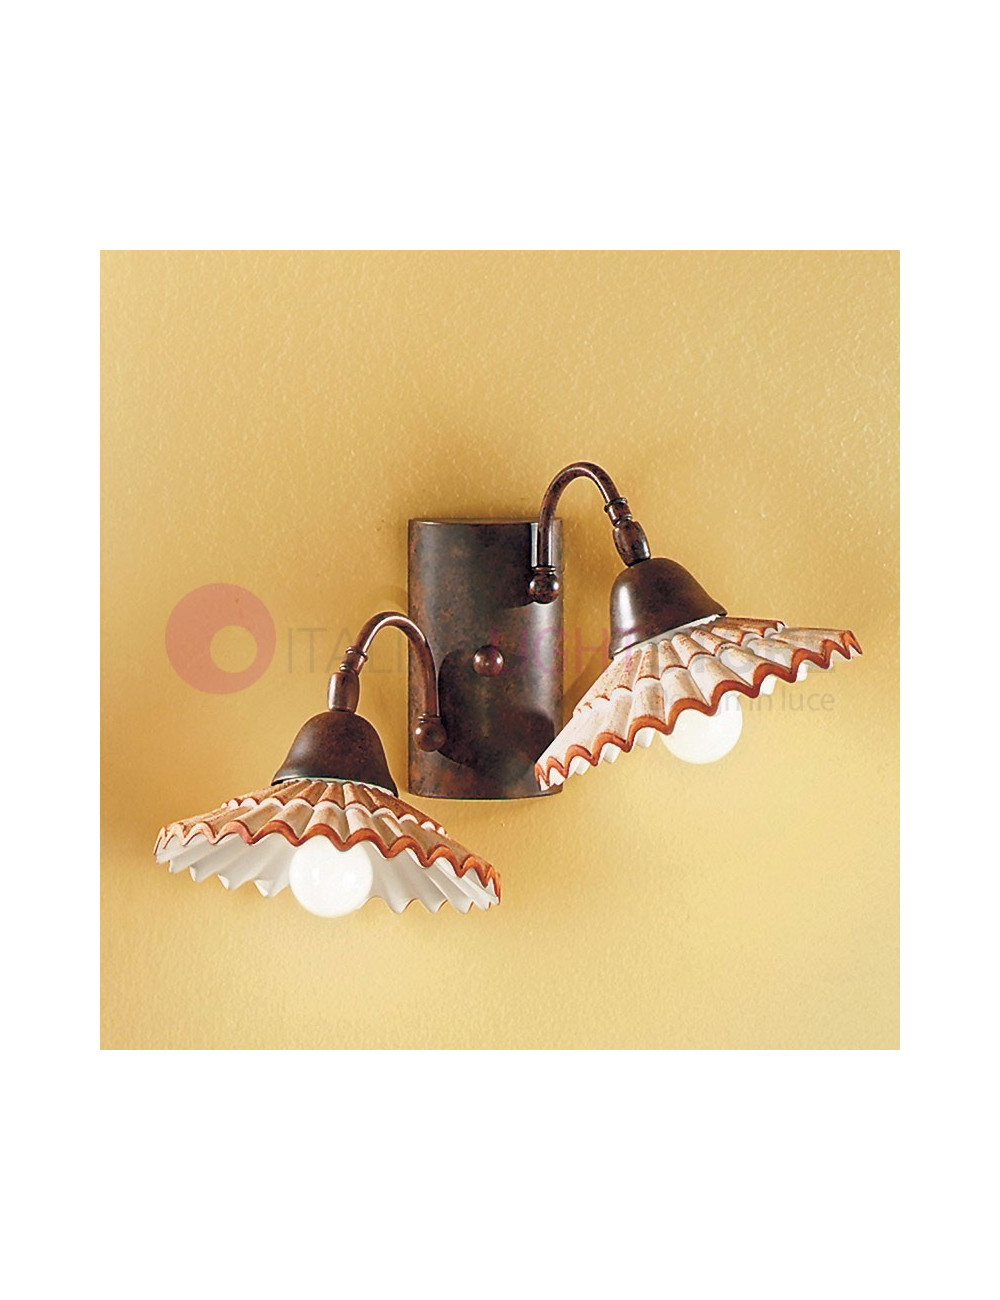 VANIA Ceramic Wall Lamp Rustic Style Country